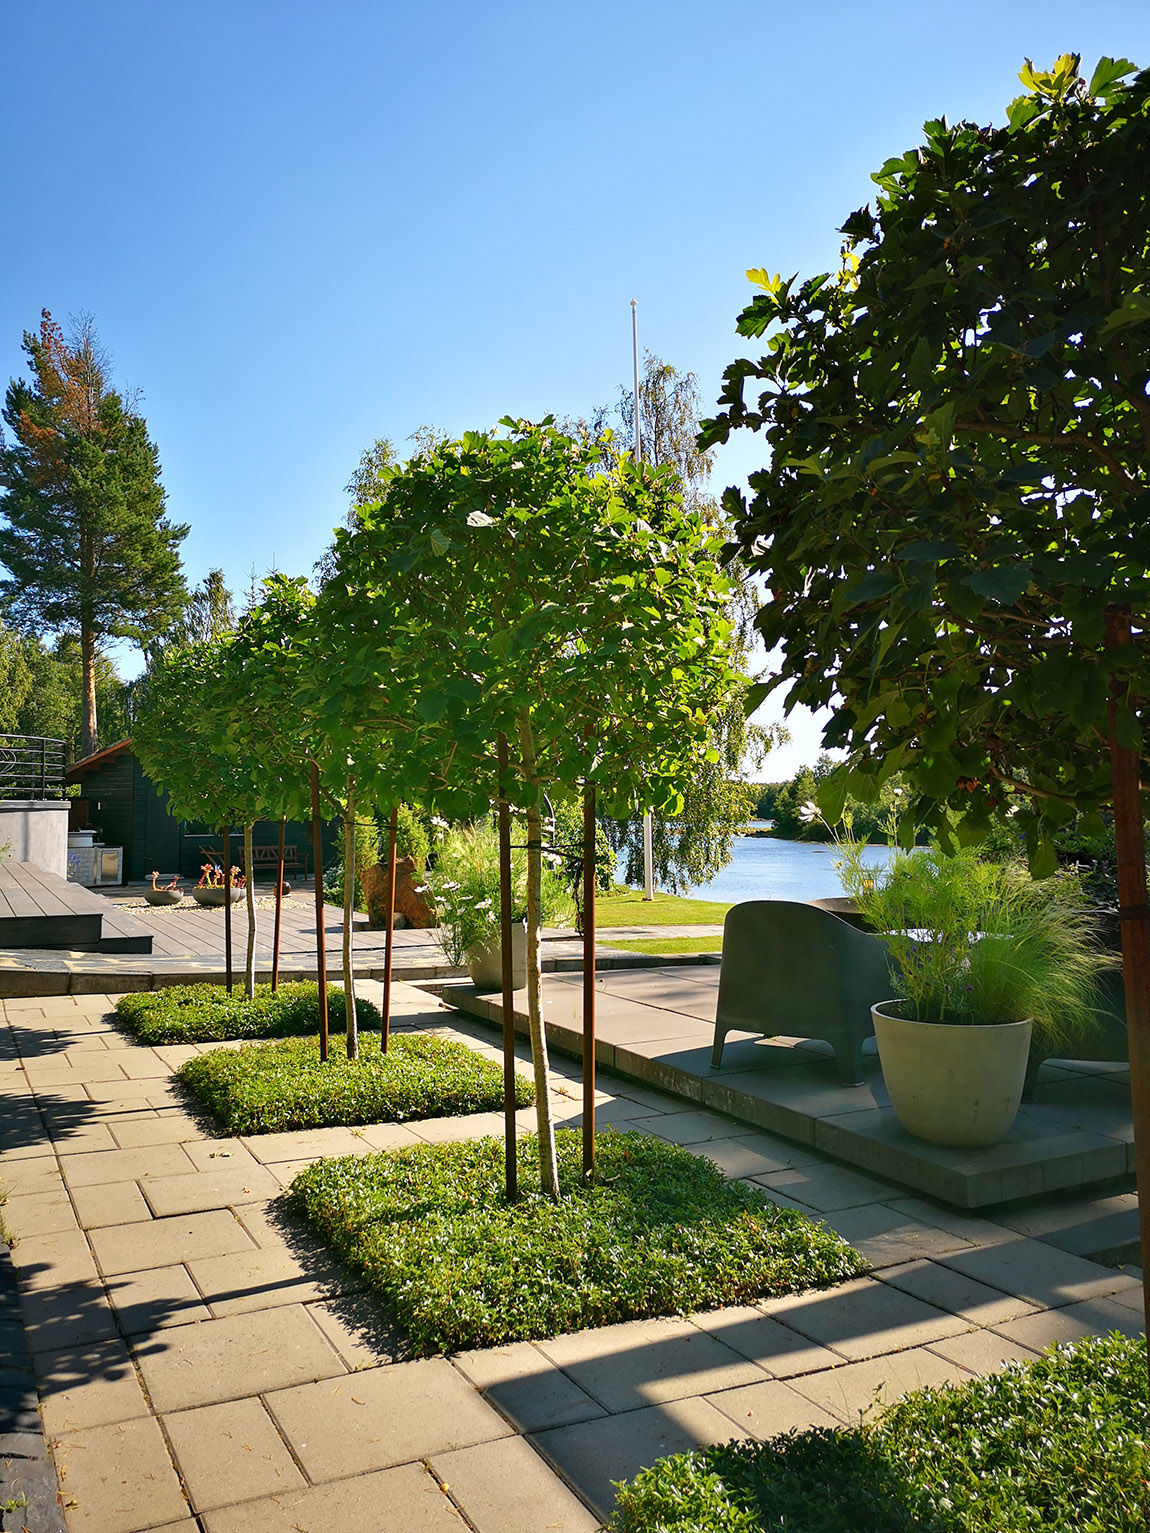 Grand Design Pihat: Where everyday luxury and garden design meet